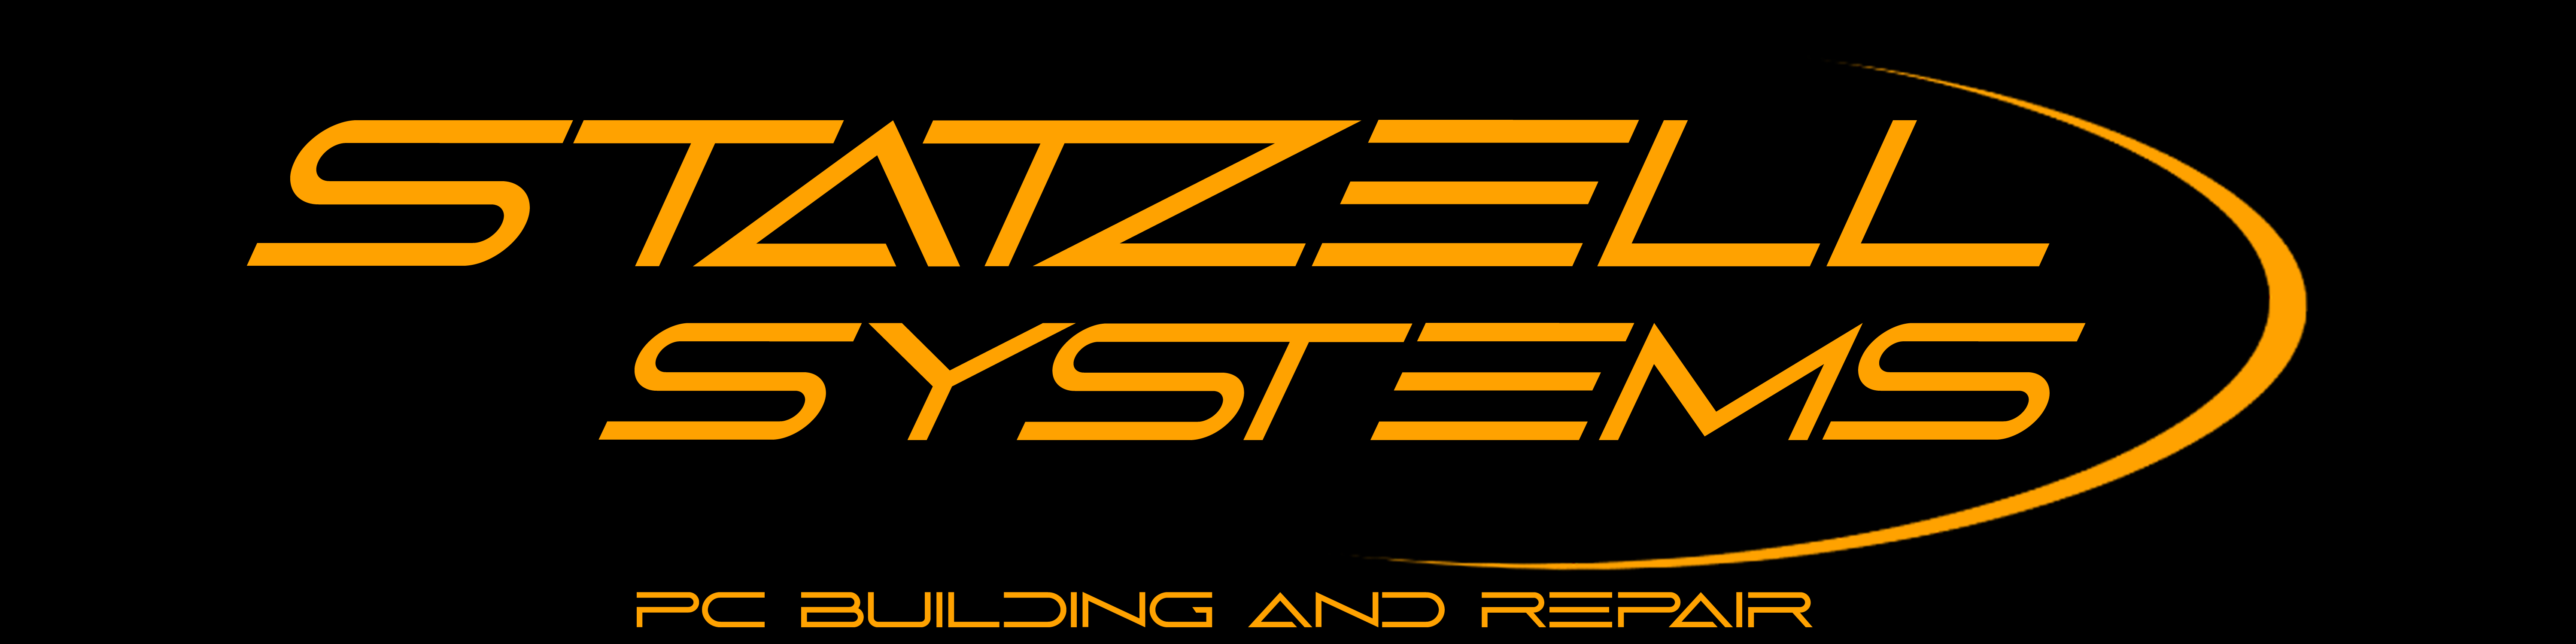 Statzell Systems Logo